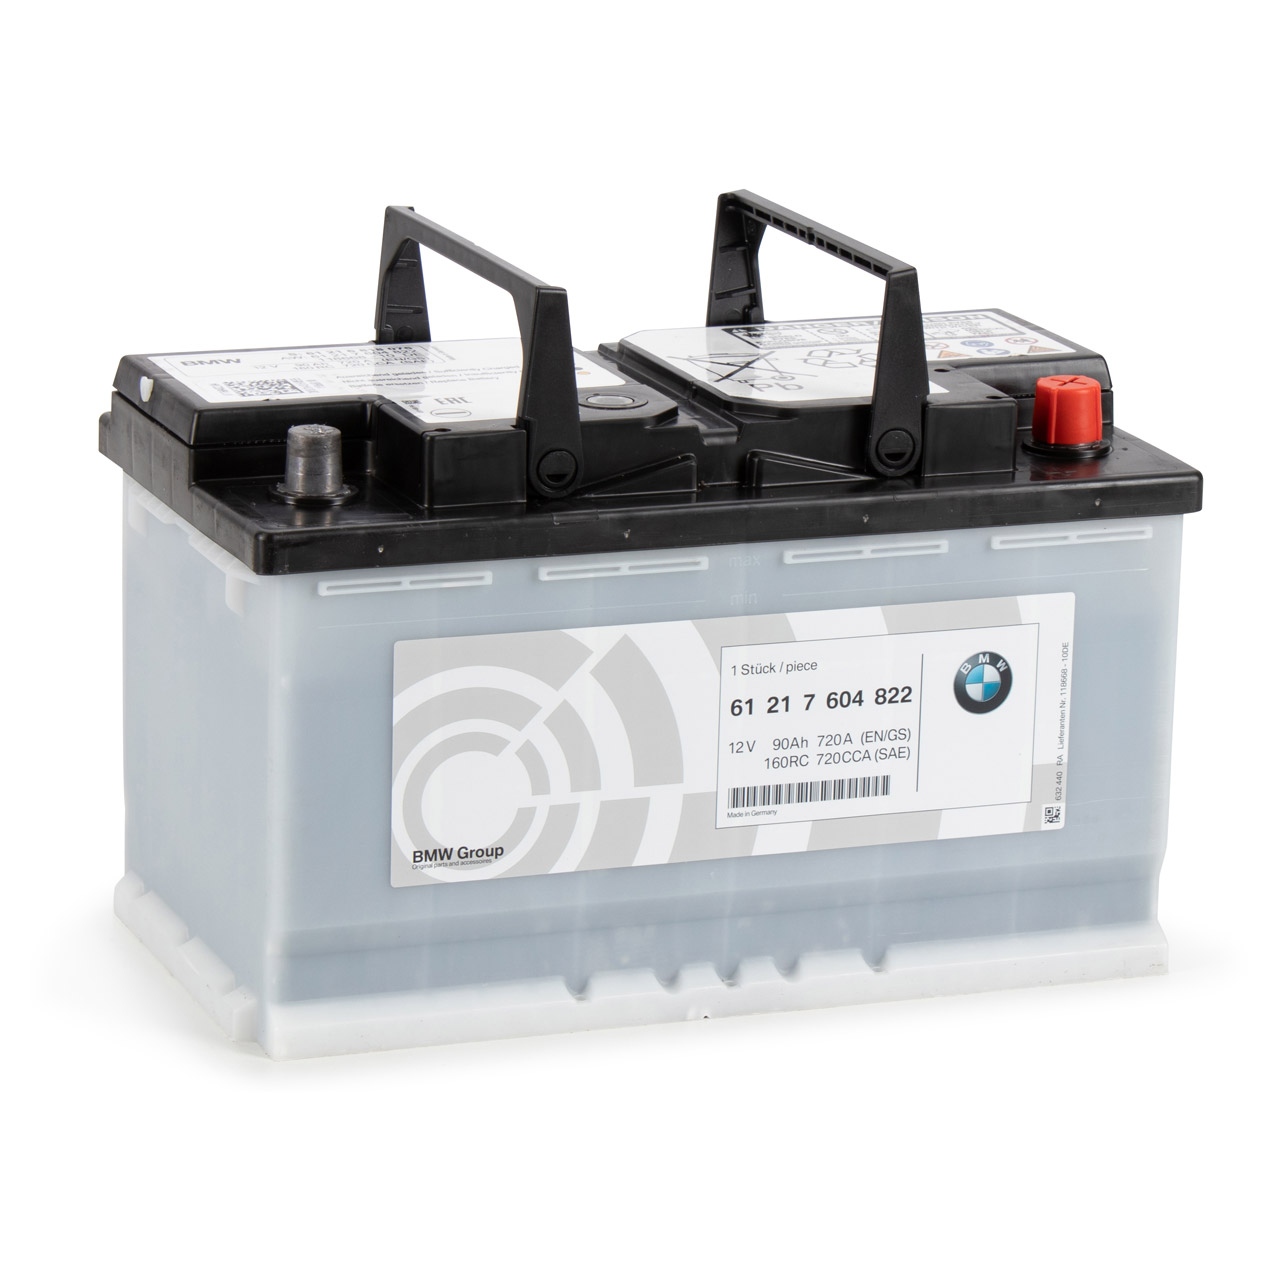 ORIGINAL BMW Autobatterie Batterie Starterbatterie 12V 90Ah 720A 61217604822